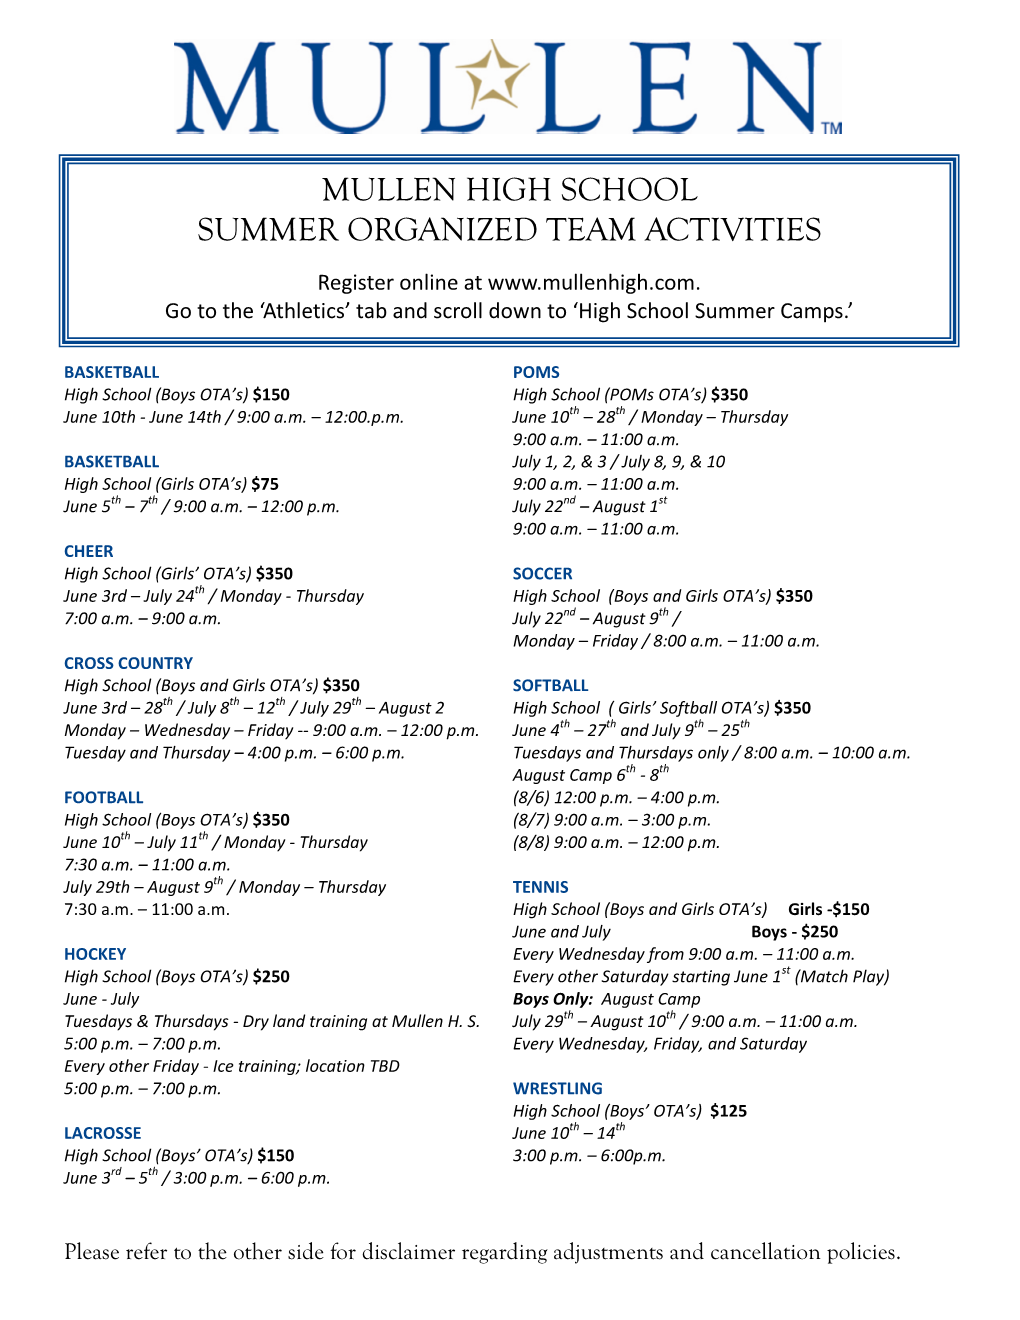 Mullen High School Summer Organized Team Activities